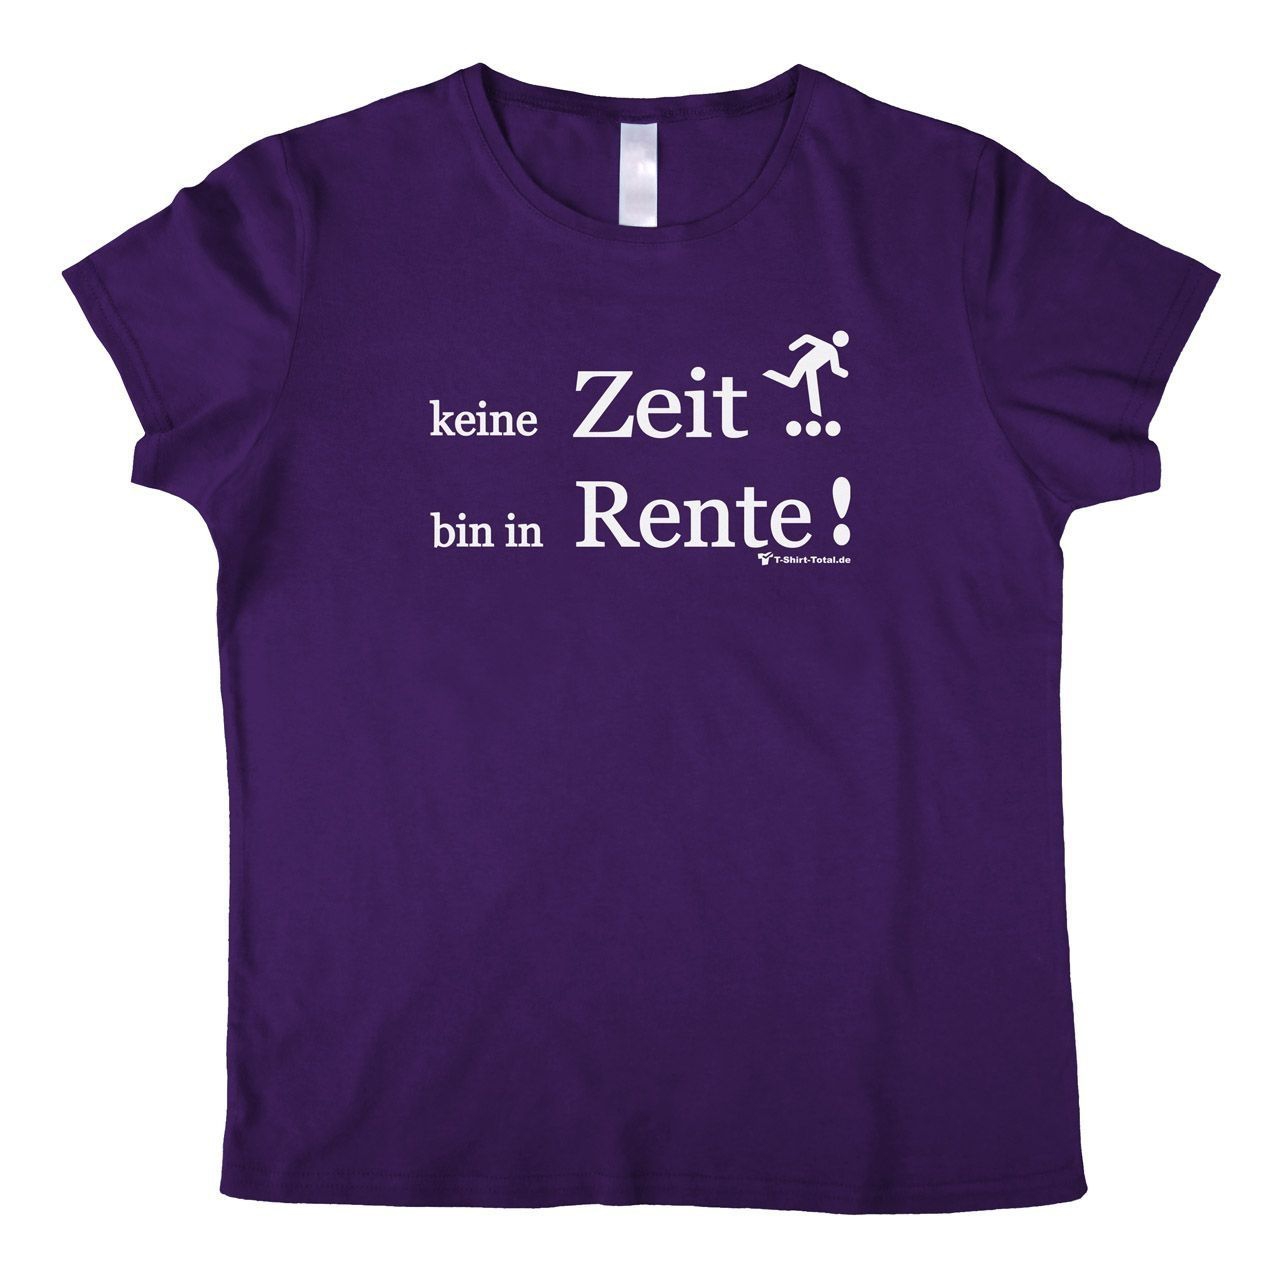 Bin in Rente Woman T-Shirt lila Extra Large